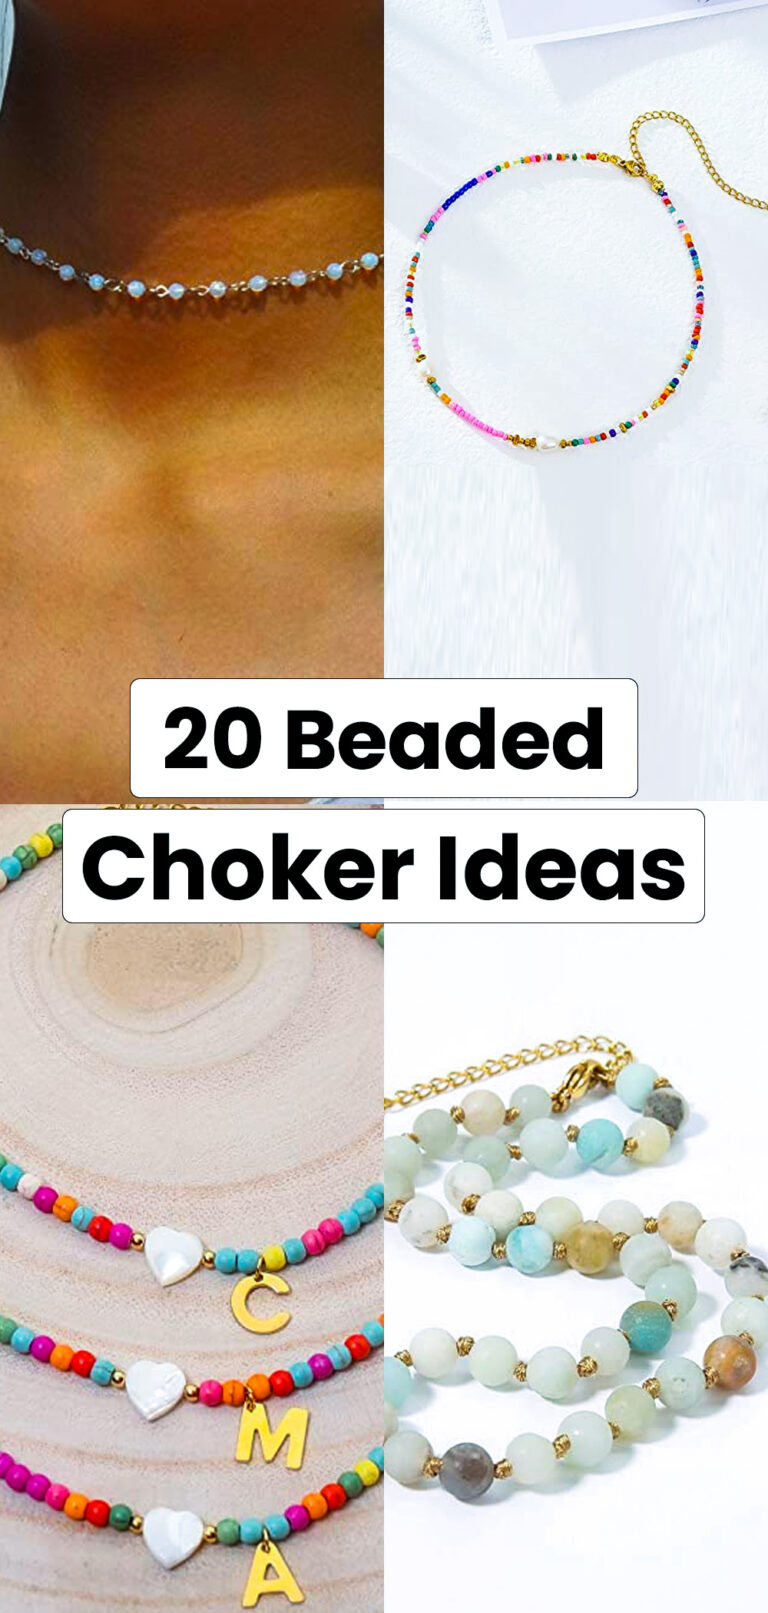 20 Beaded Choker Ideas